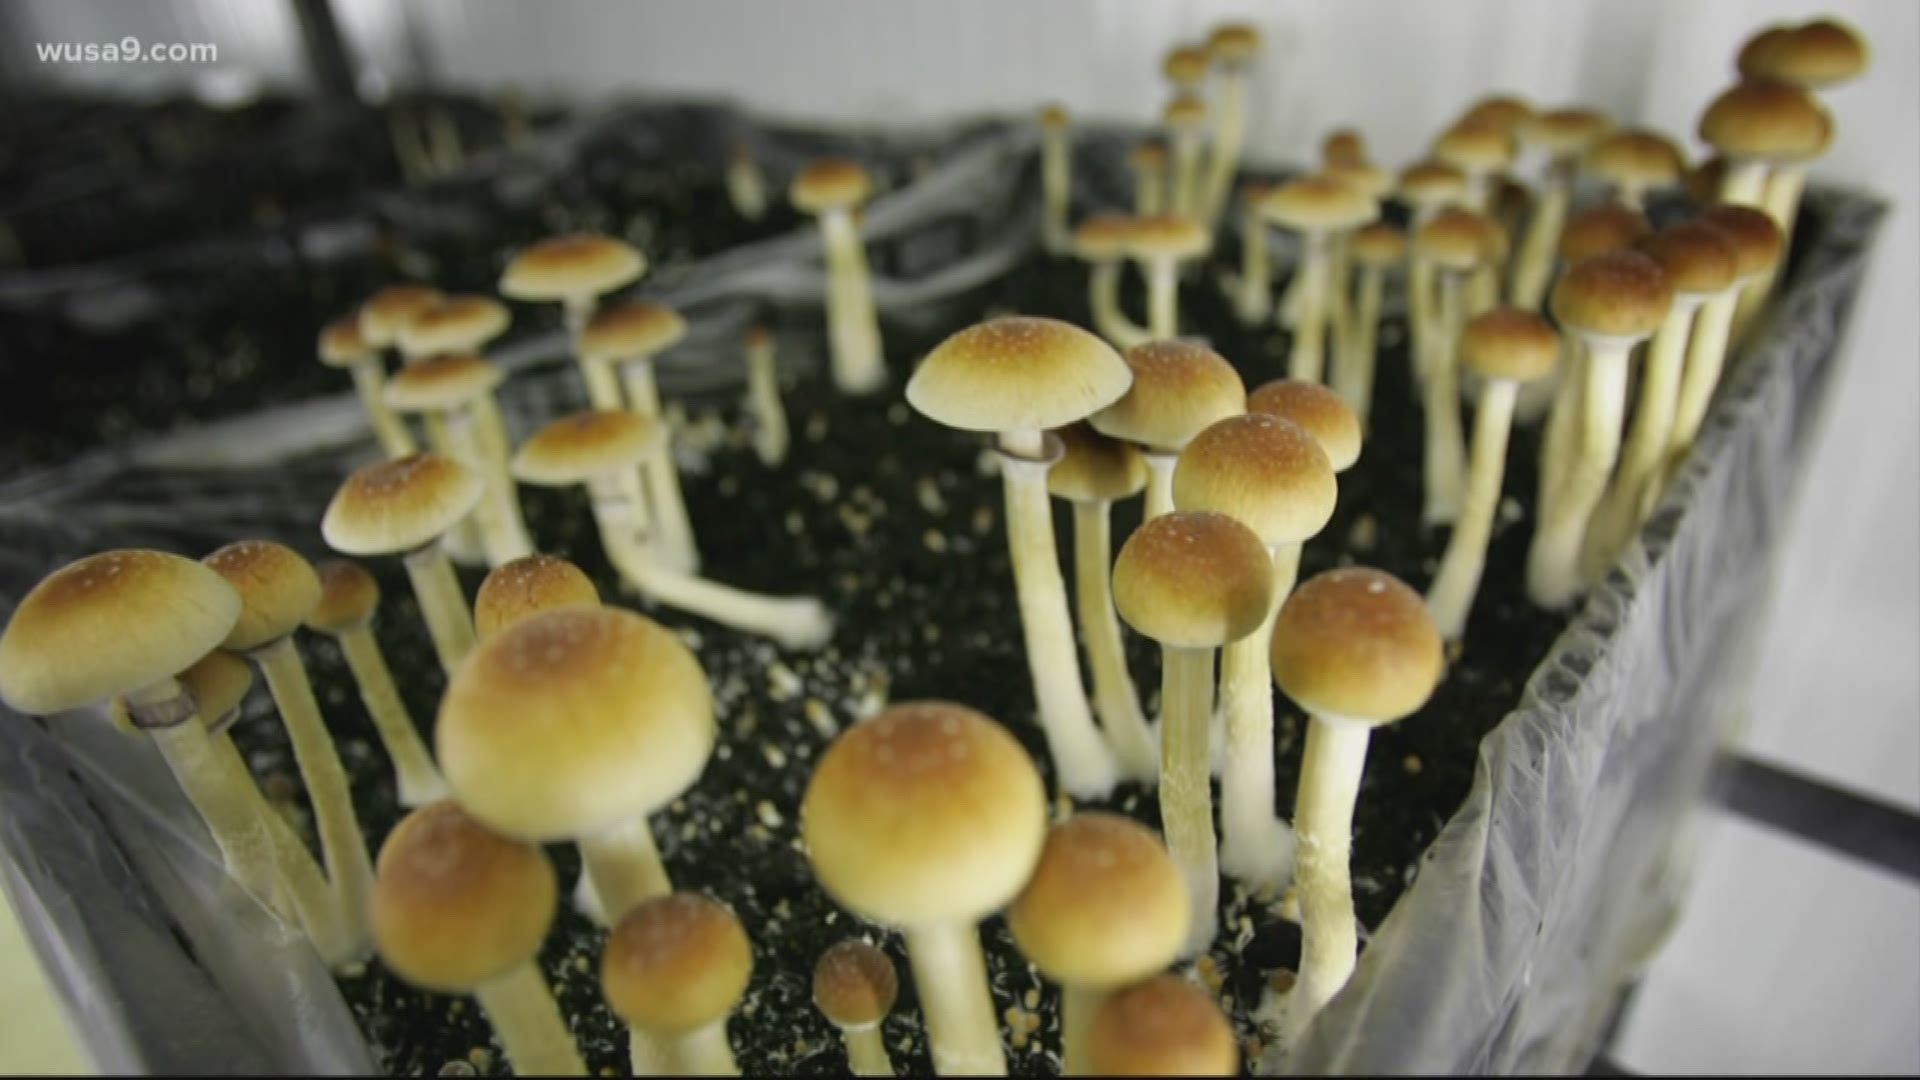 The health risks of making use of wonder mushrooms